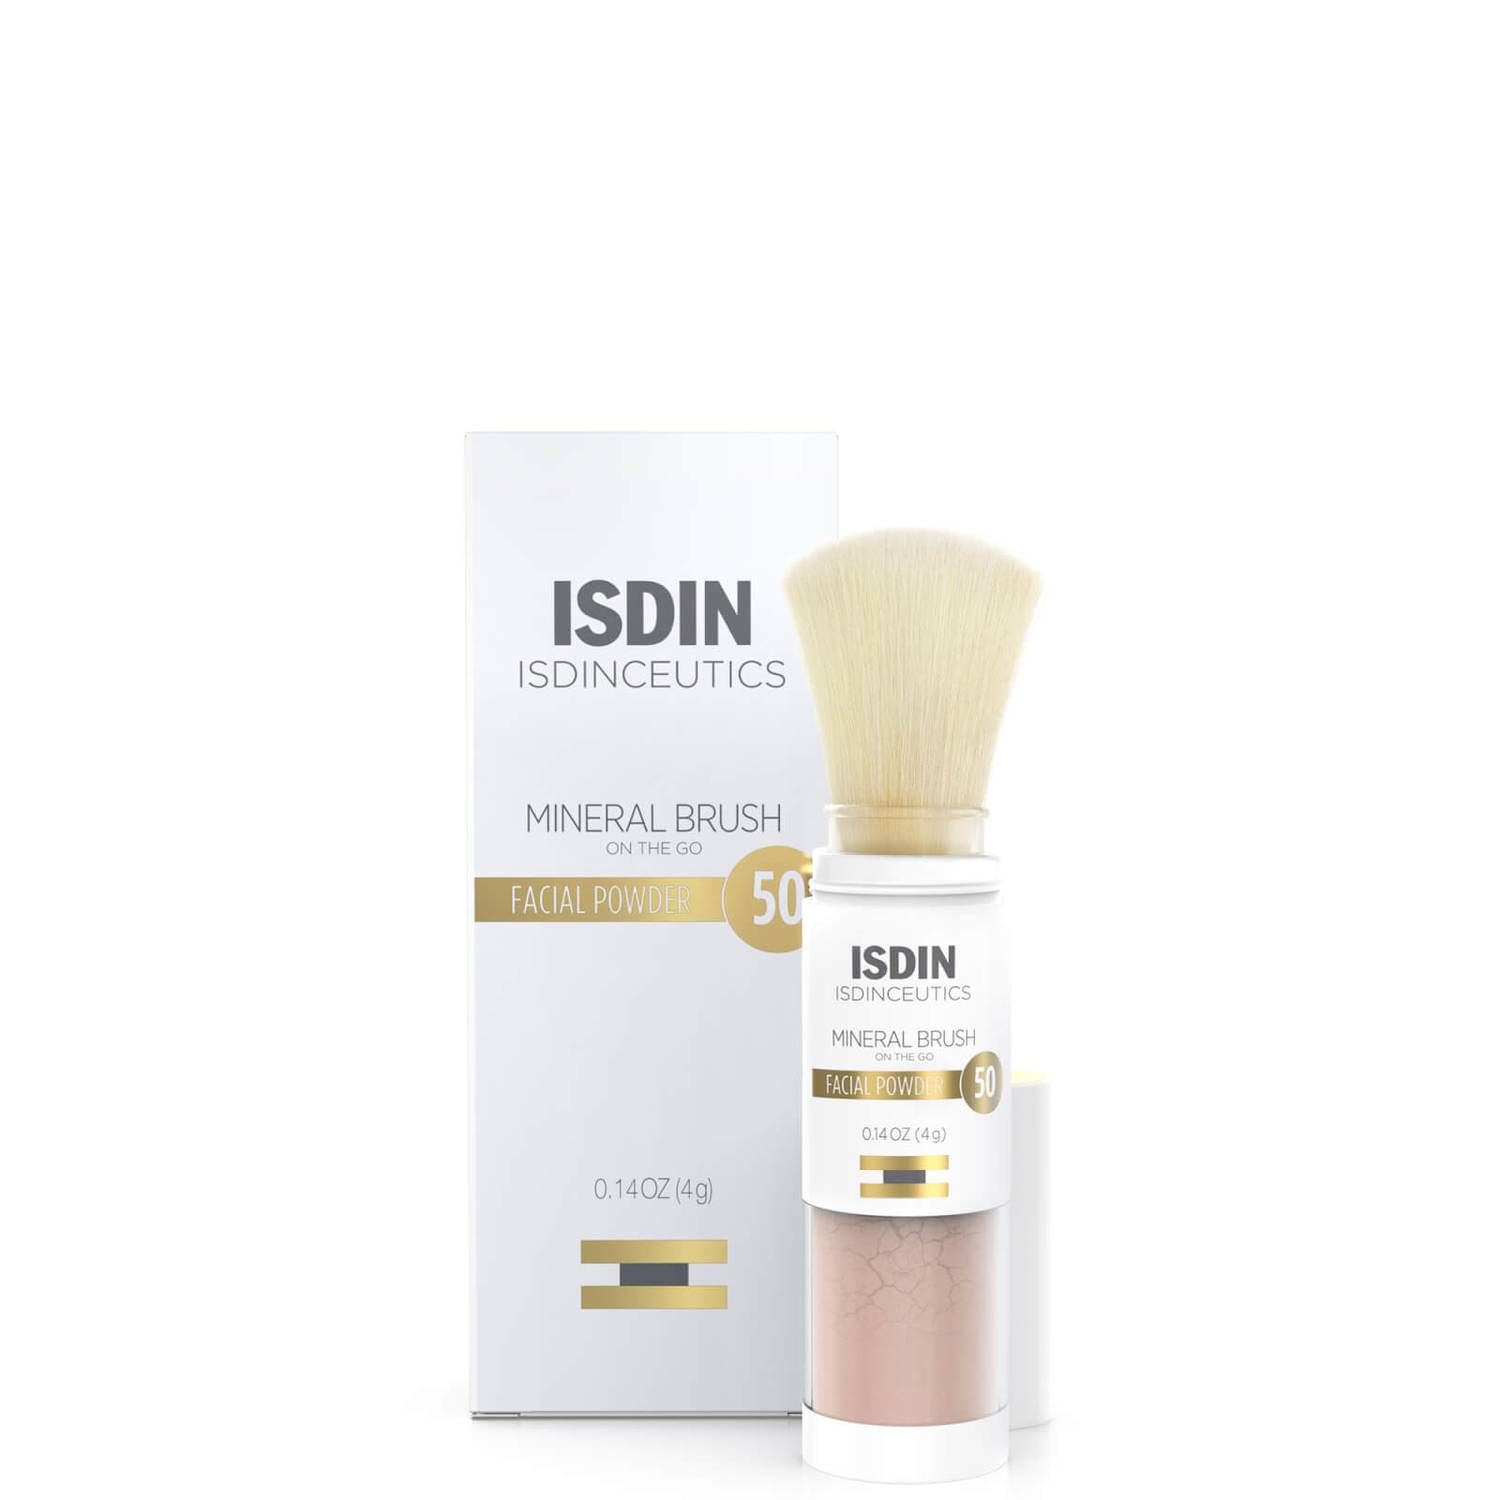 ISDIN ISDINCEUTICS Mineral Brush 100% Mineral Powder Matte Finish with Zinc Oxide 0.14 oz | Dermstore (US)